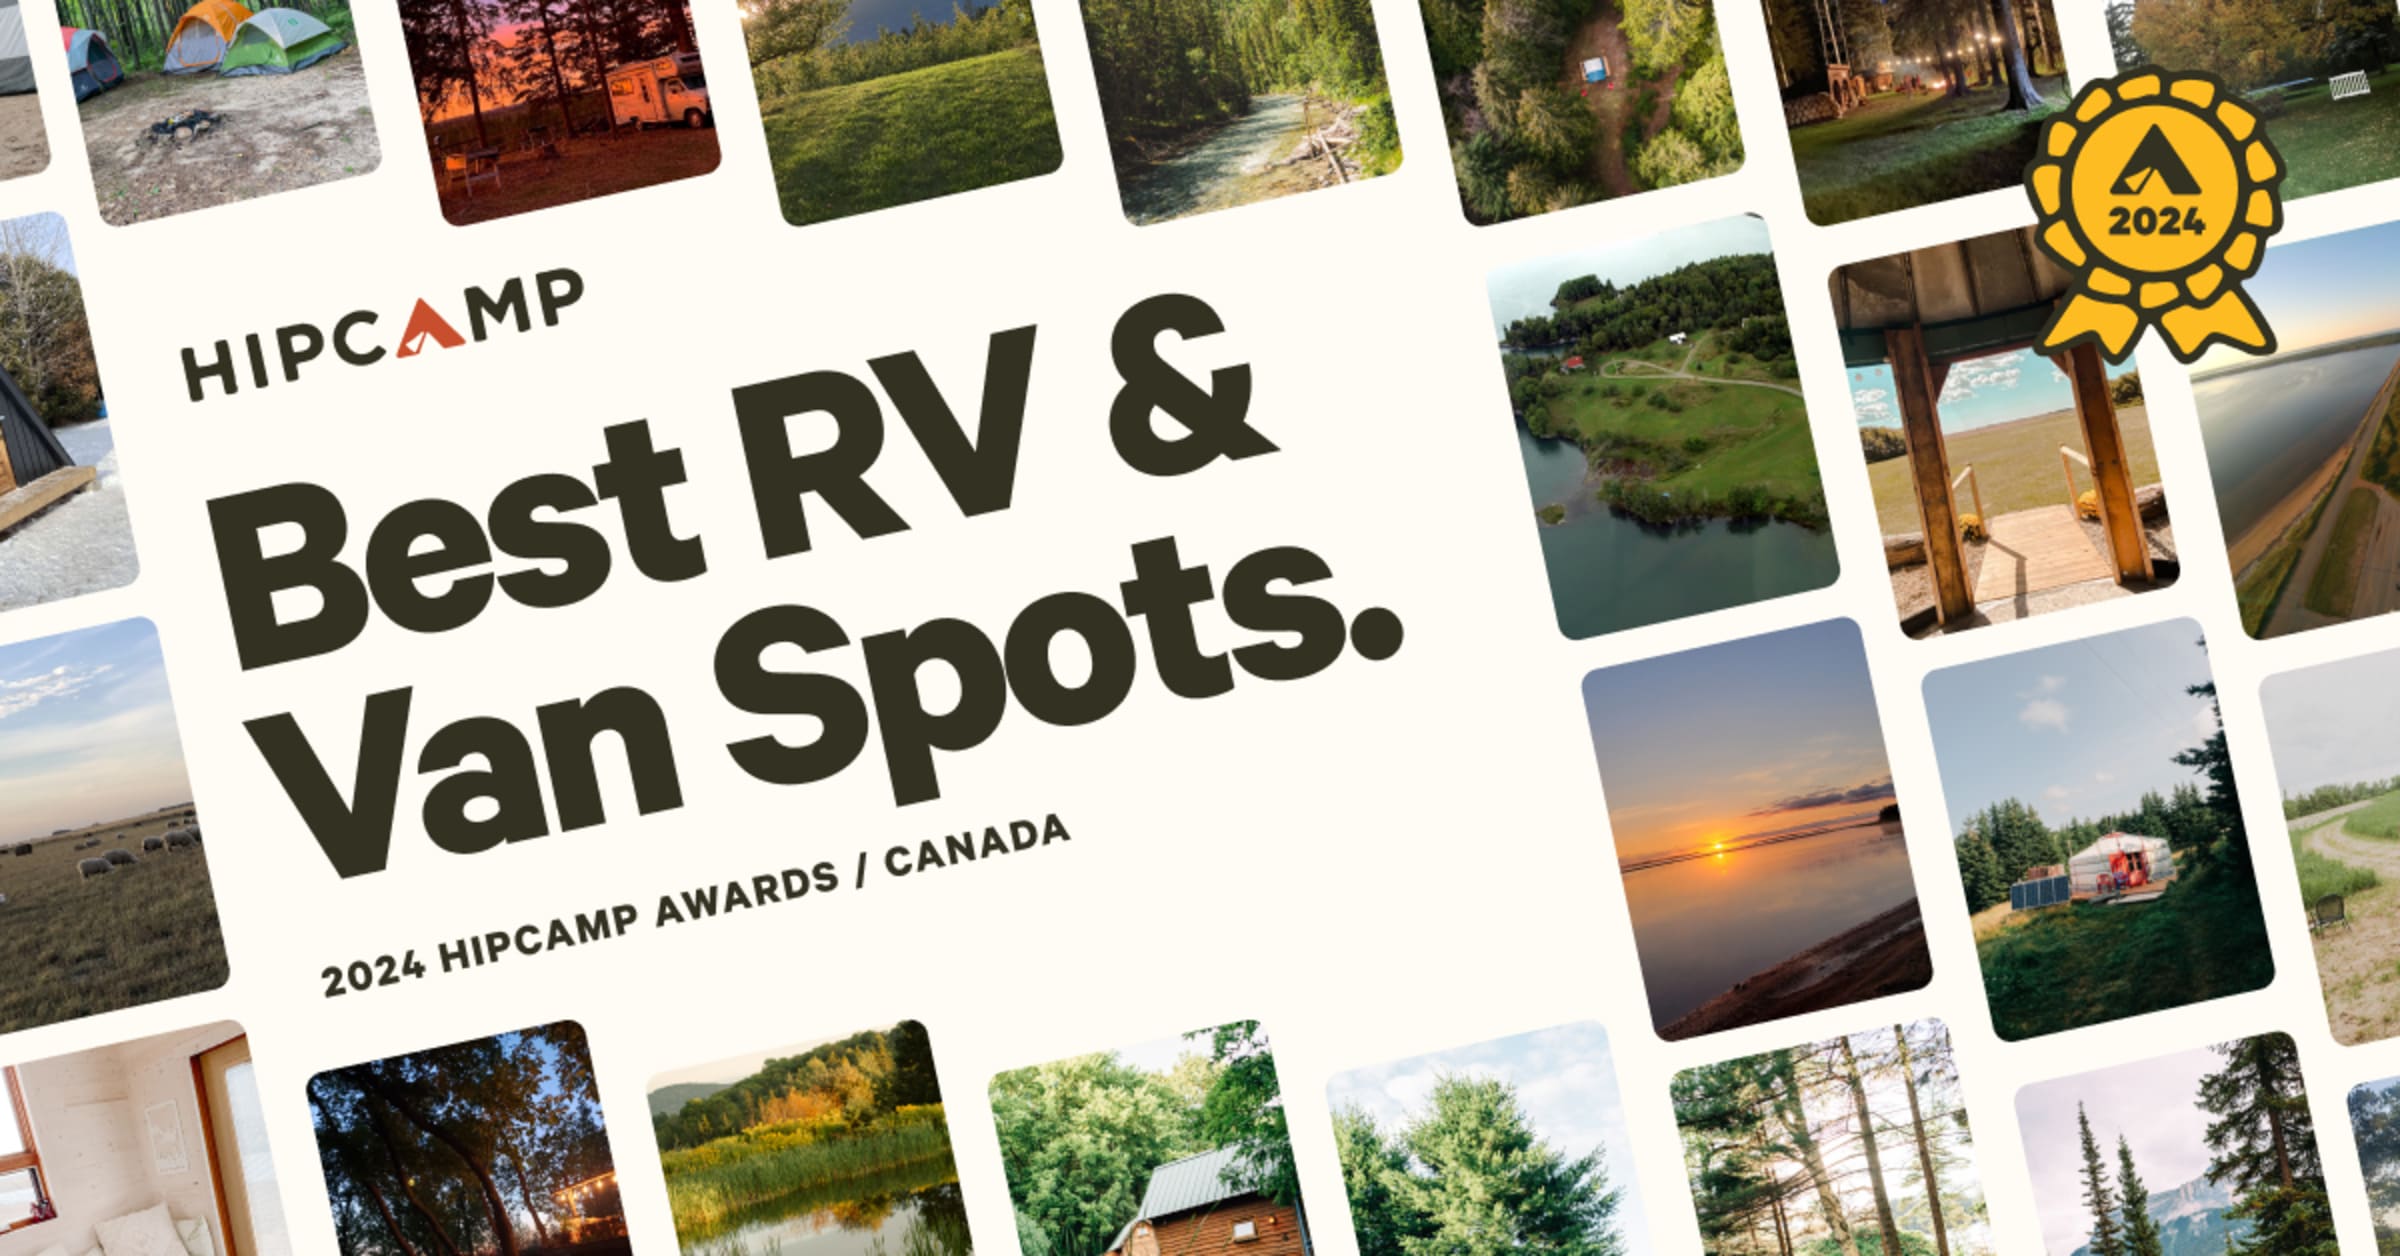 Hipcamp Awards 2024: Best RV & Van Spots in Canada